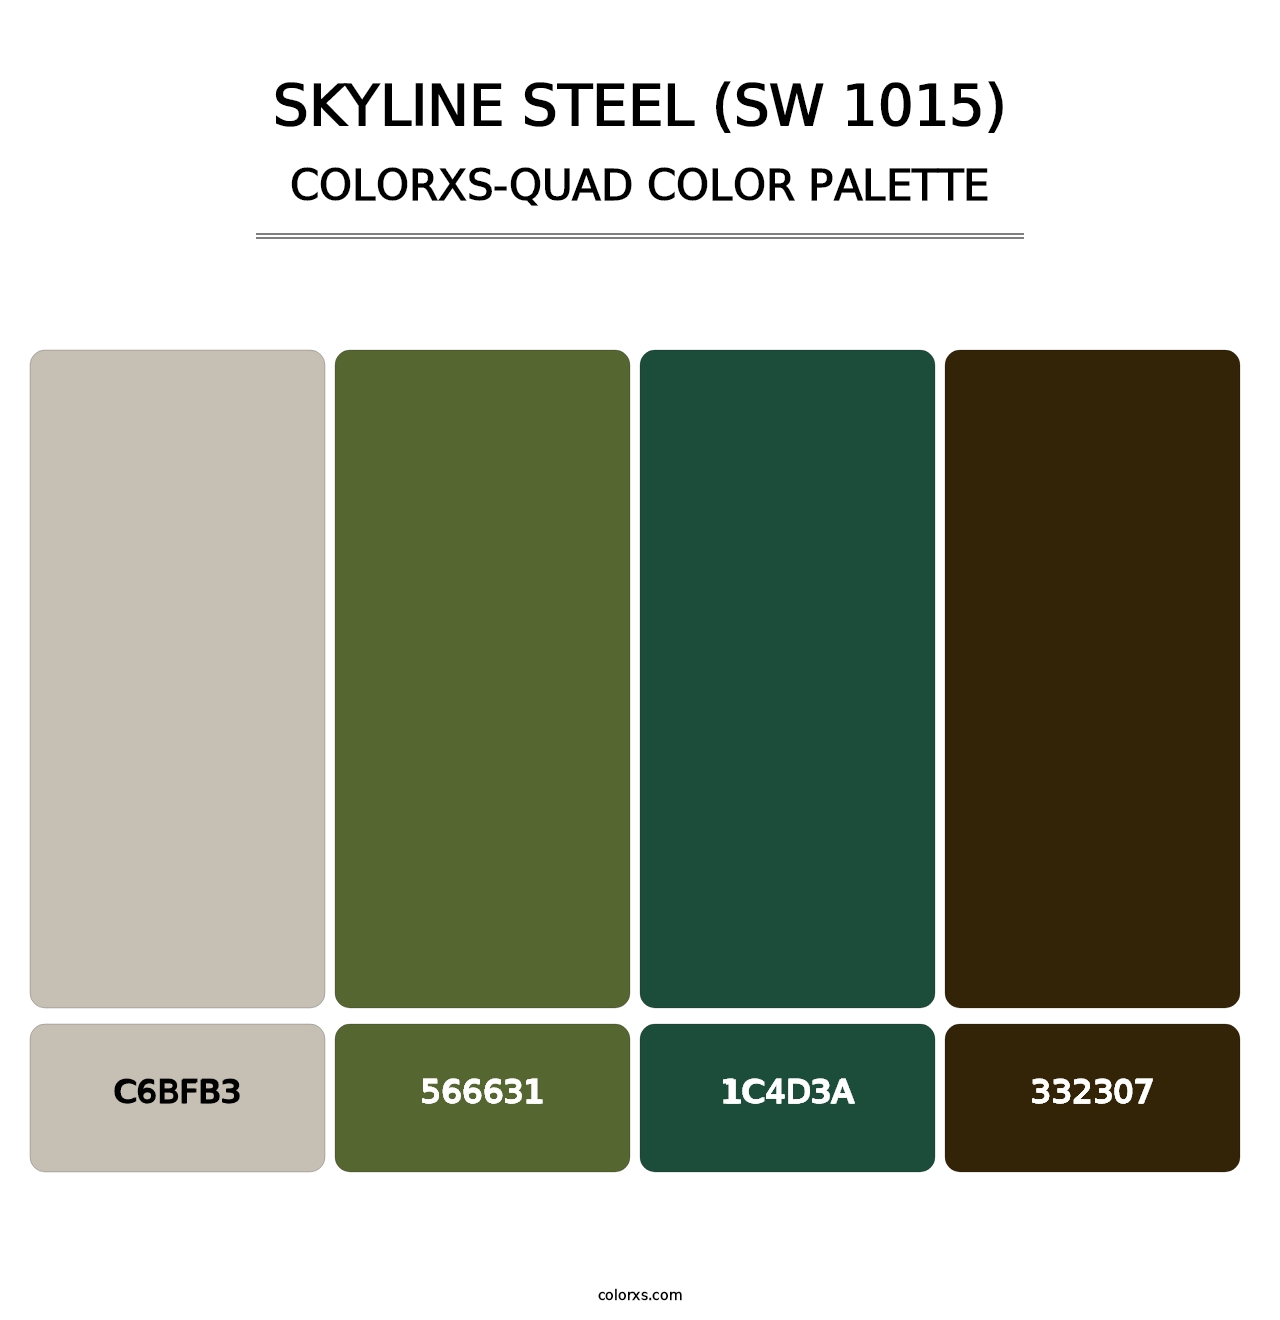 Skyline Steel (SW 1015) - Colorxs Quad Palette